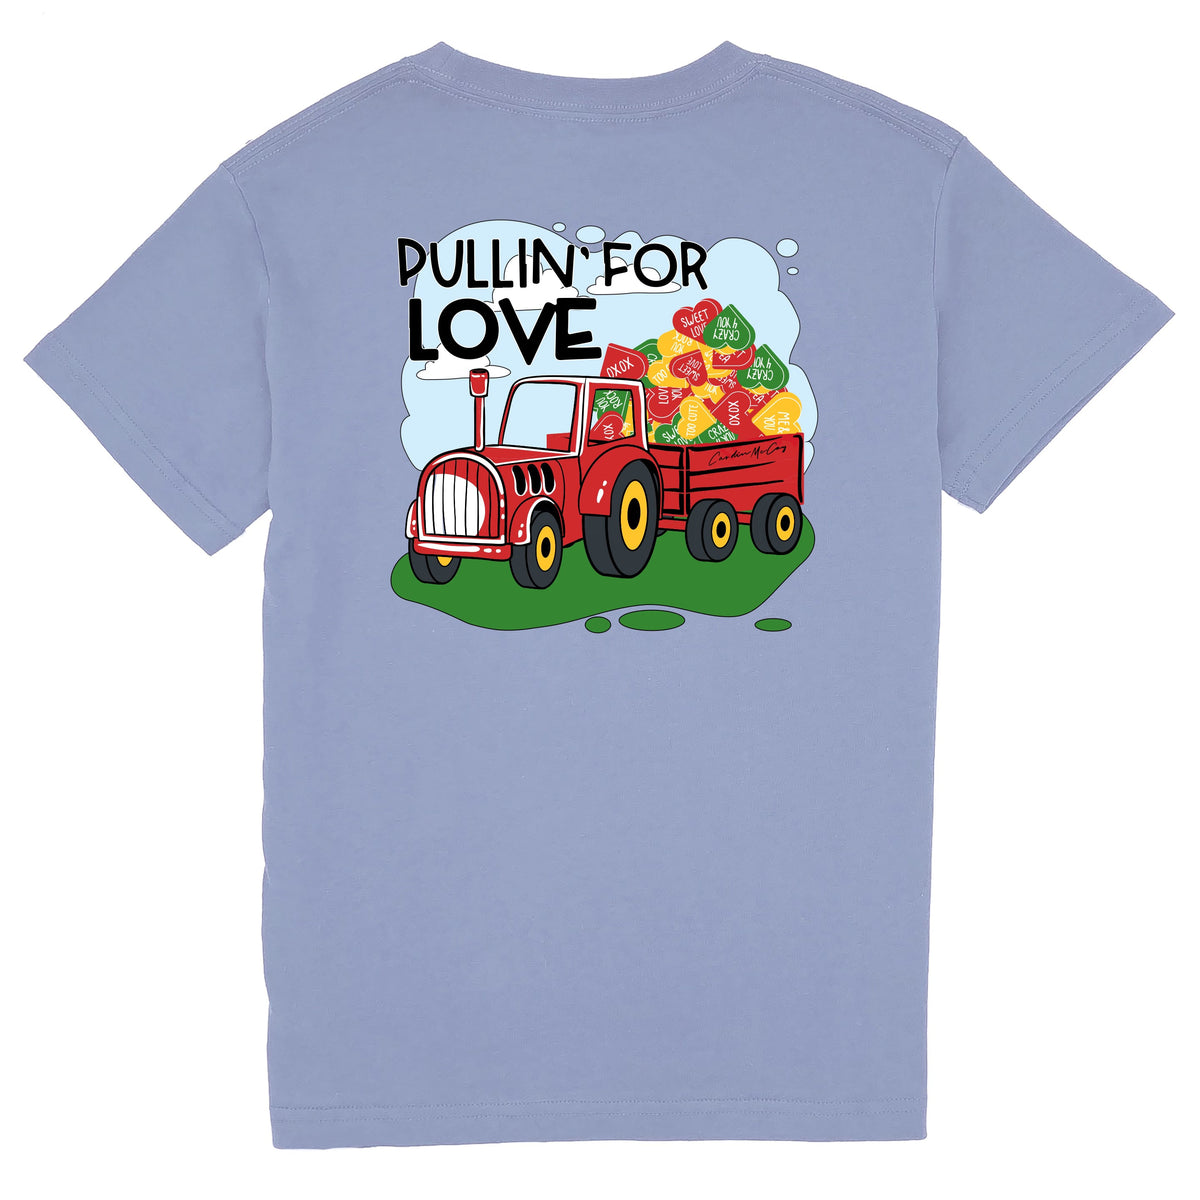 Kids' Pulling For Love Short Sleeve Tee Short Sleeve T-Shirt Cardin McCoy XXS (2/3) Washed Denim 